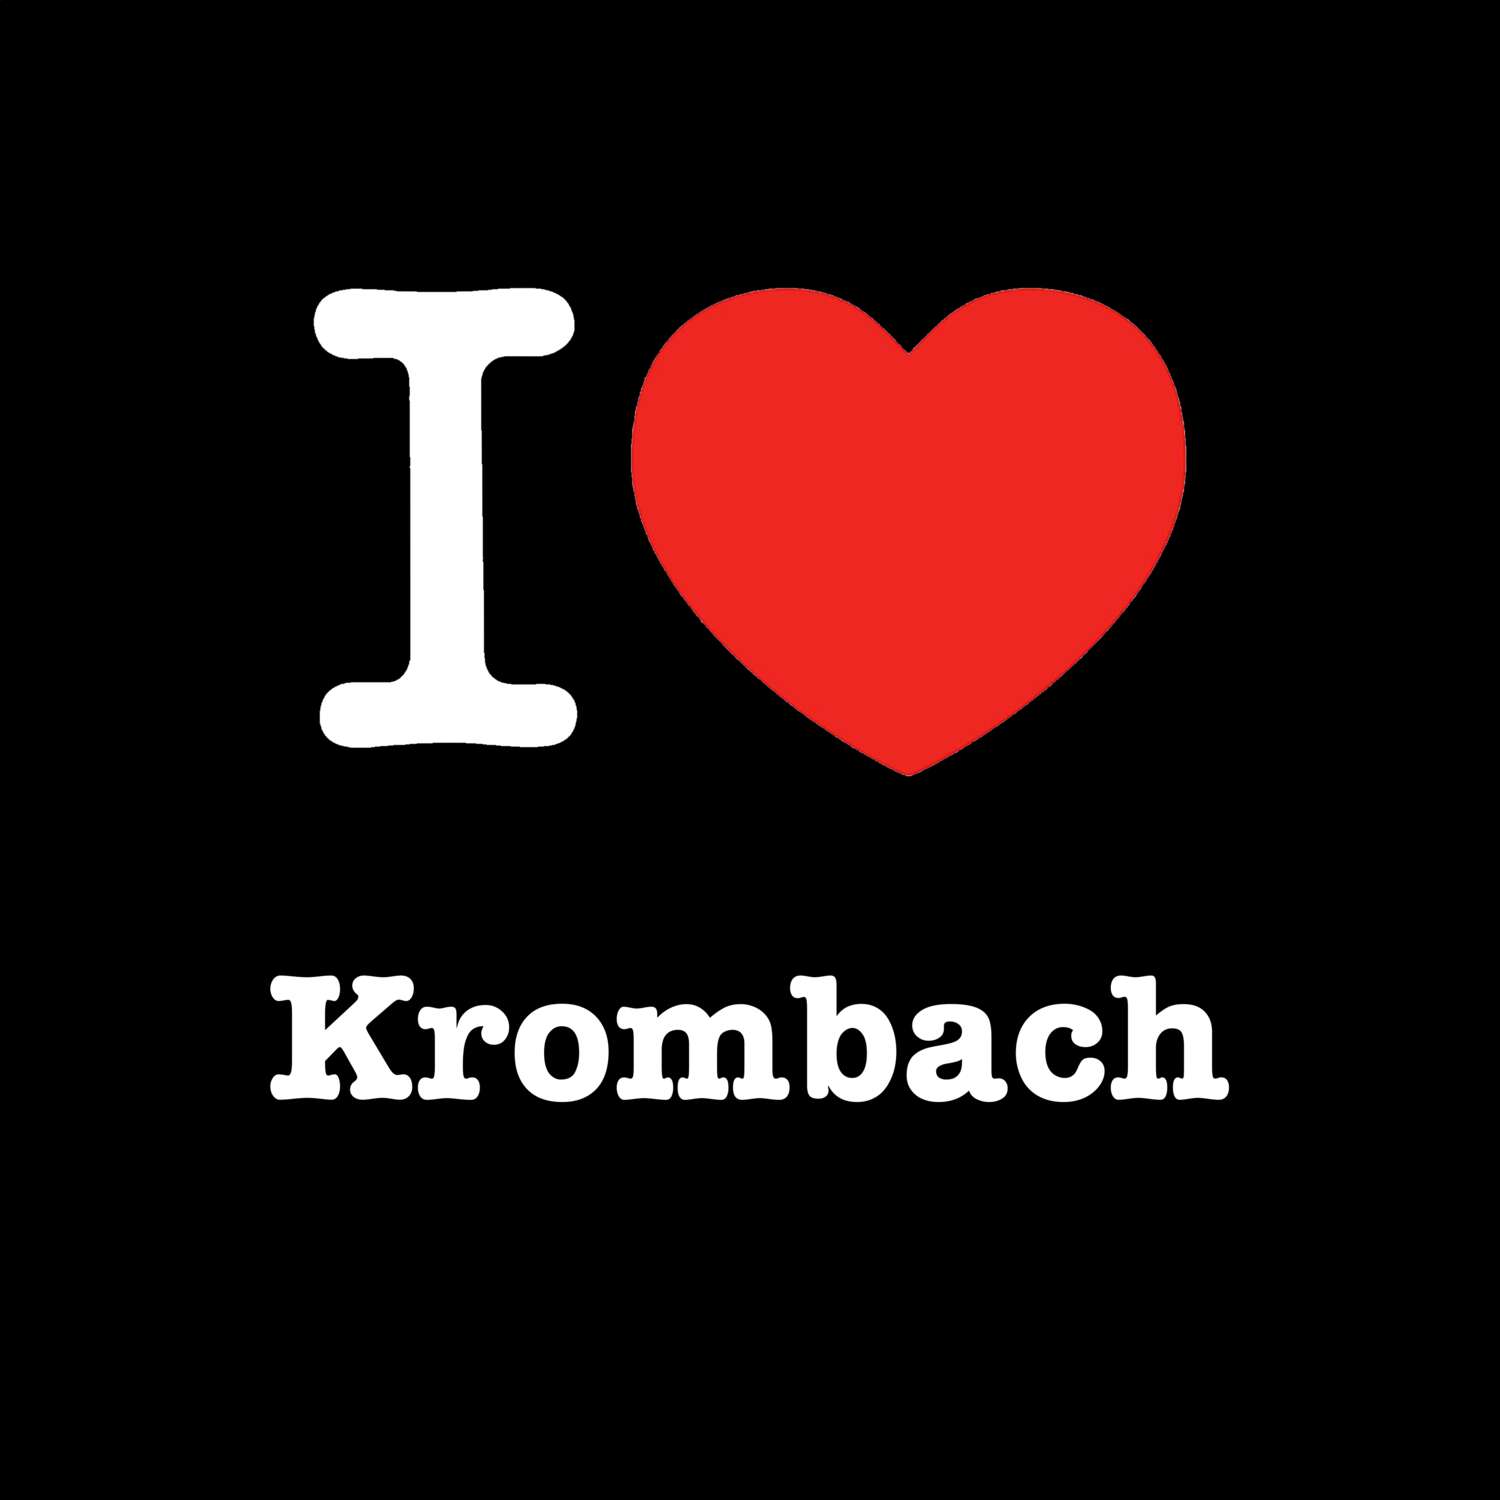 Krombach T-Shirt »I love«